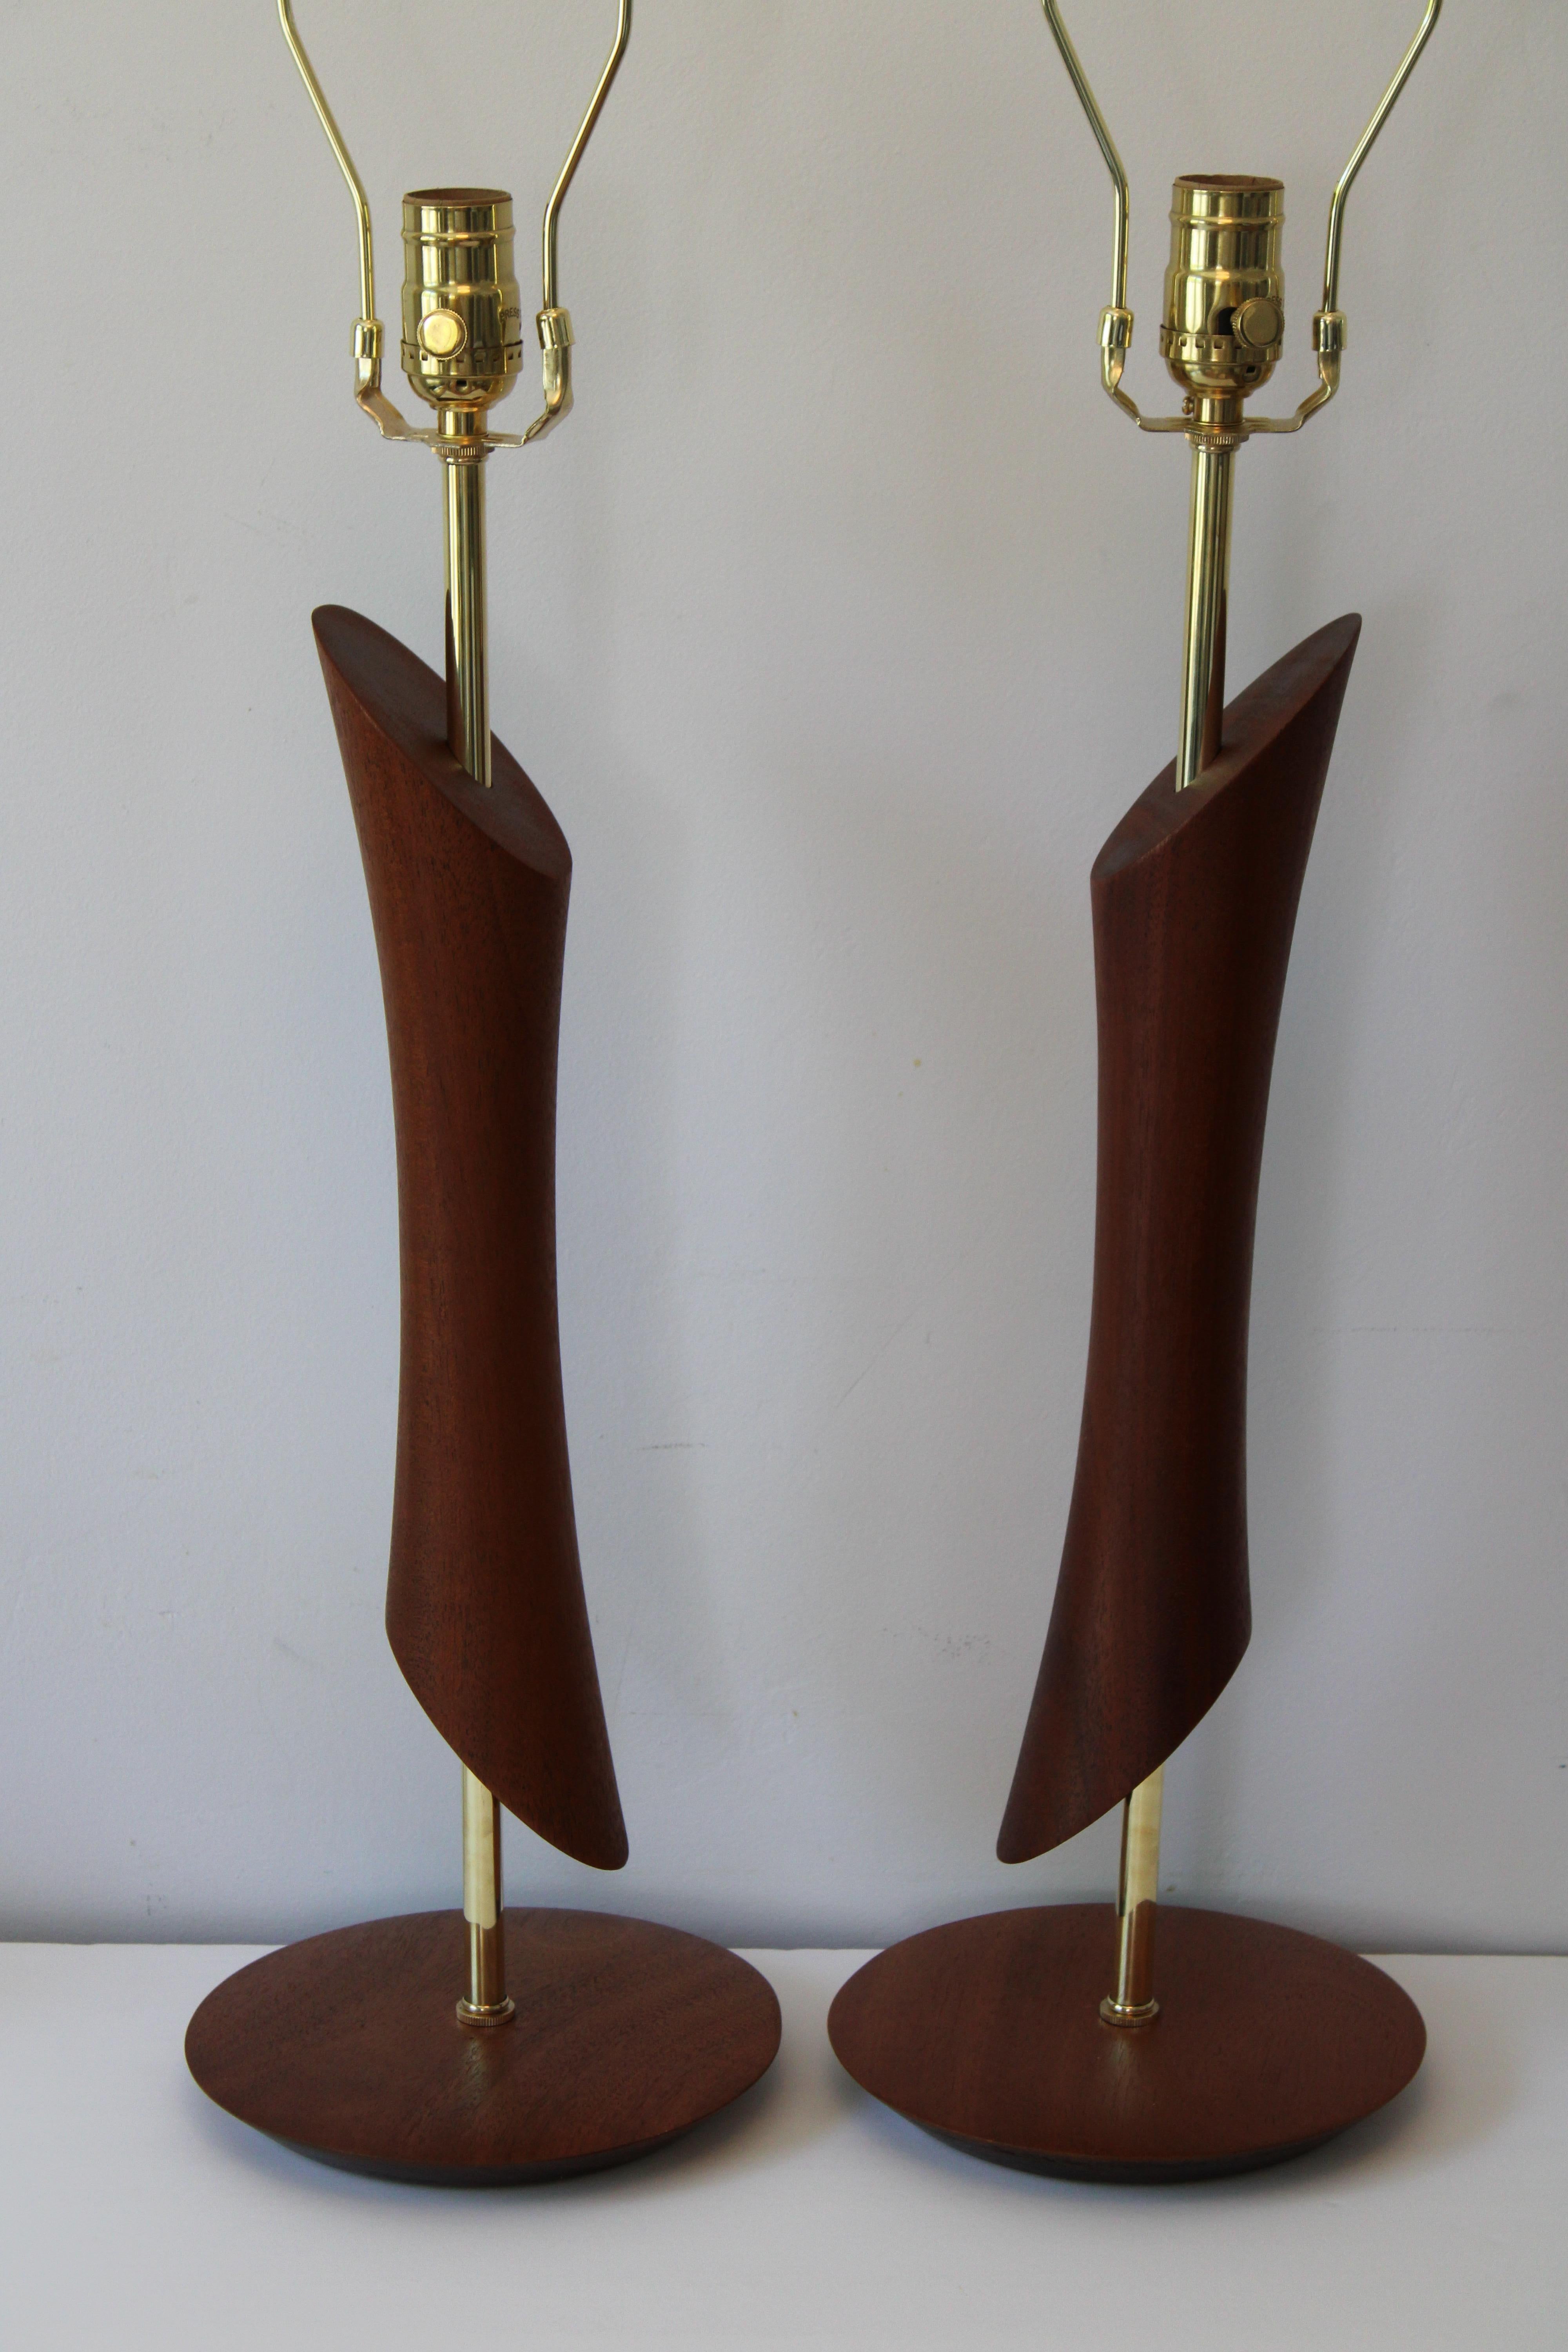 Pair of mid century lathe cut walnut lamps. Each lamp measures 21